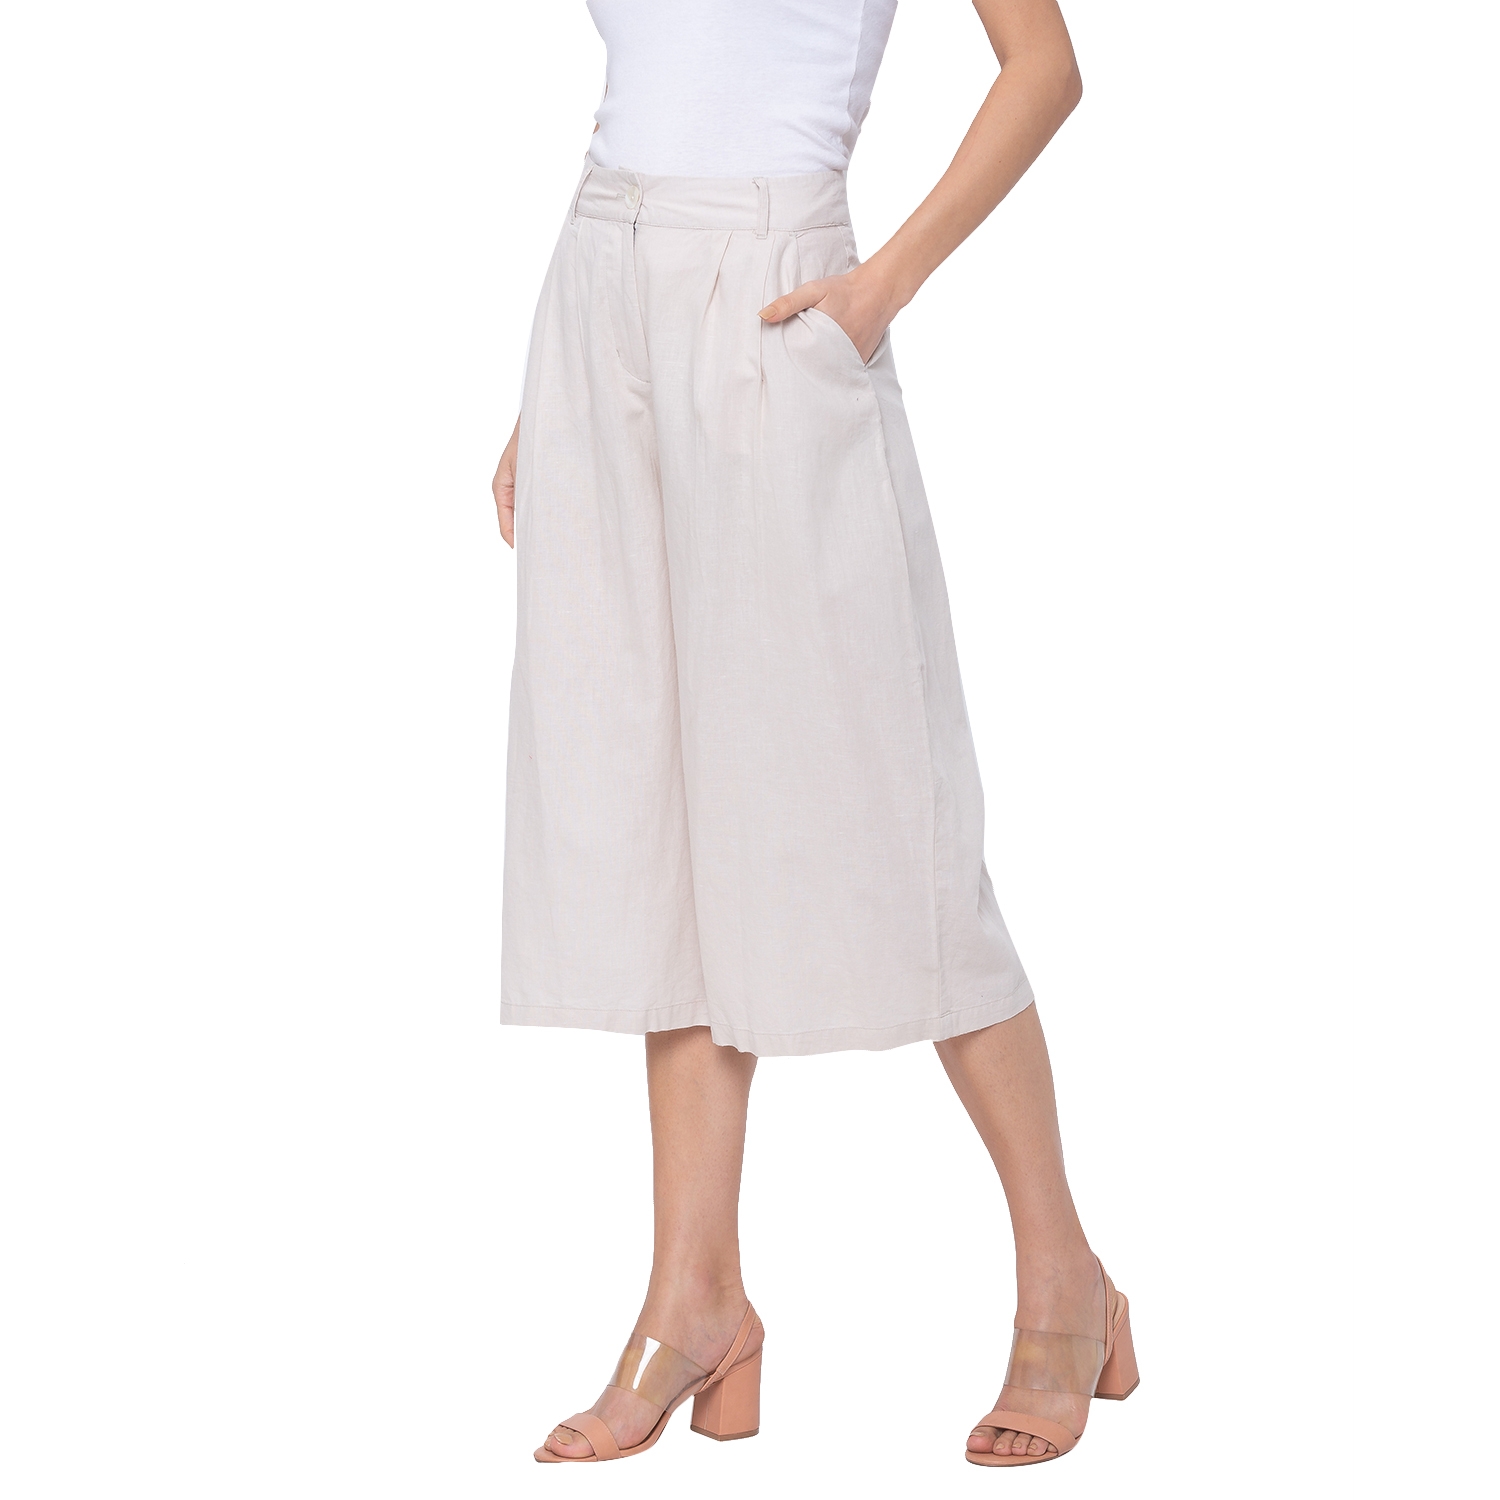 globus | Women's White Cotton Solid Culottes 1